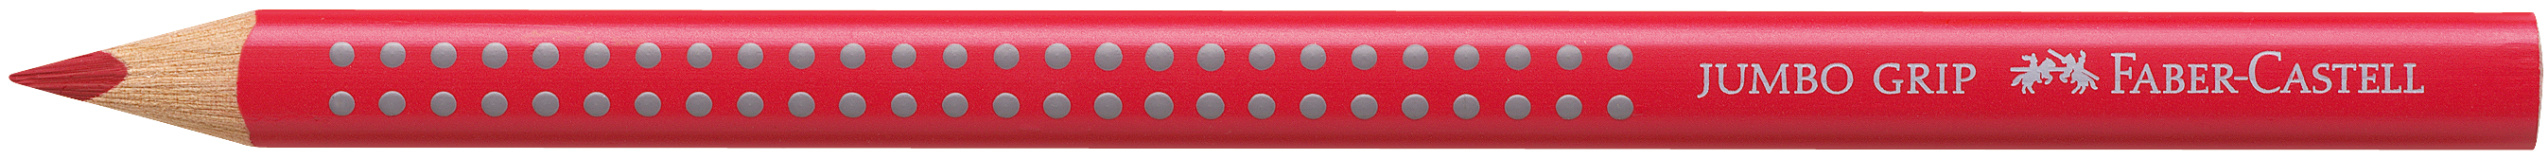 FABER-CASTELL Crayon de couleur Jumbo Grip 110926 karmin